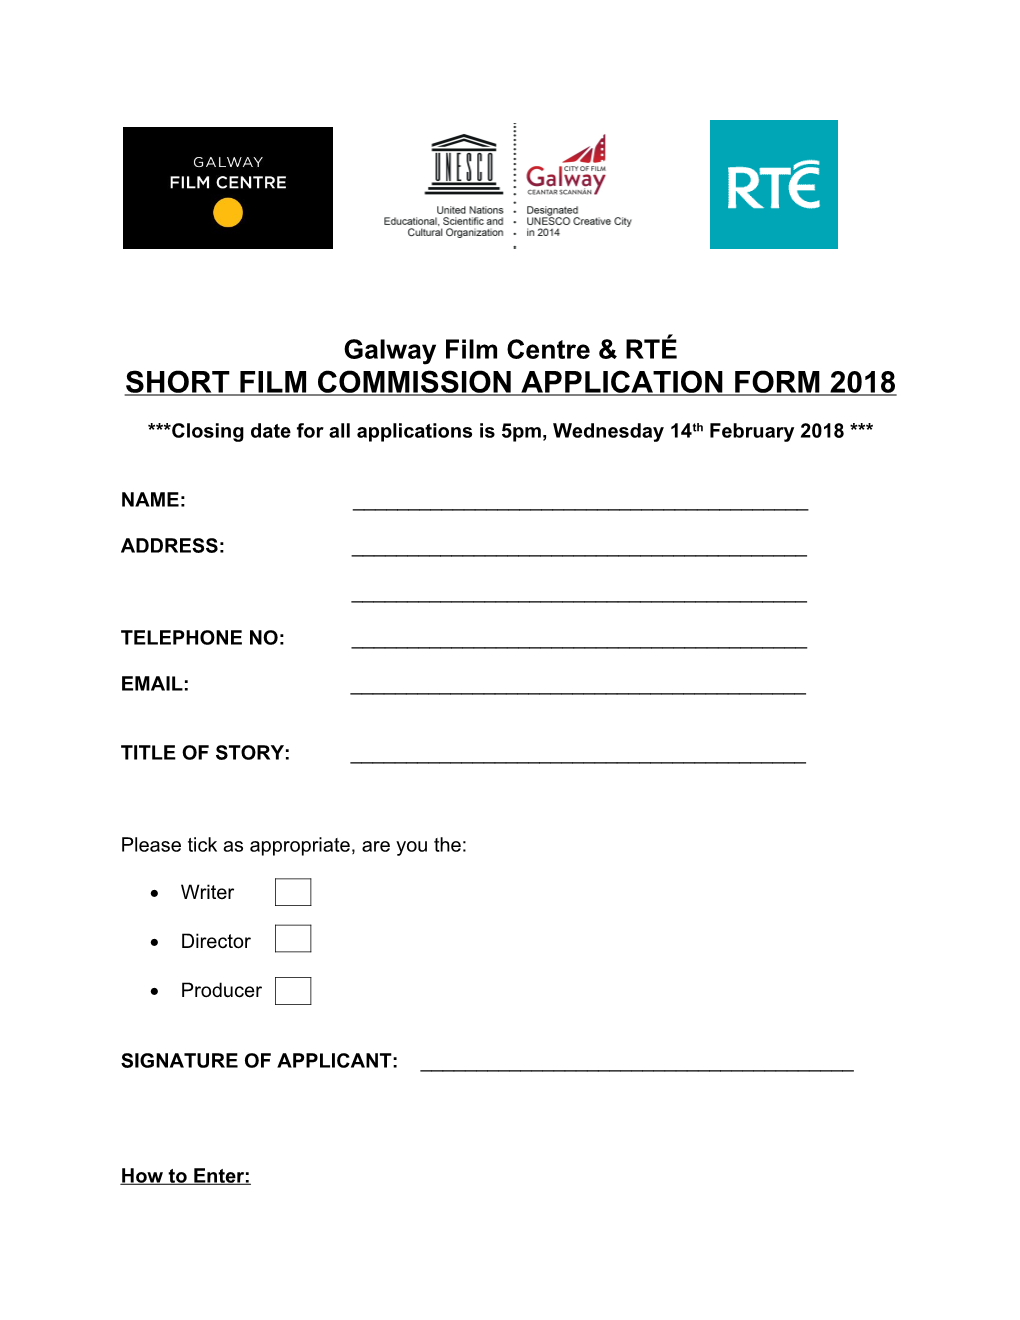 Short Film Commission Application Form 2018